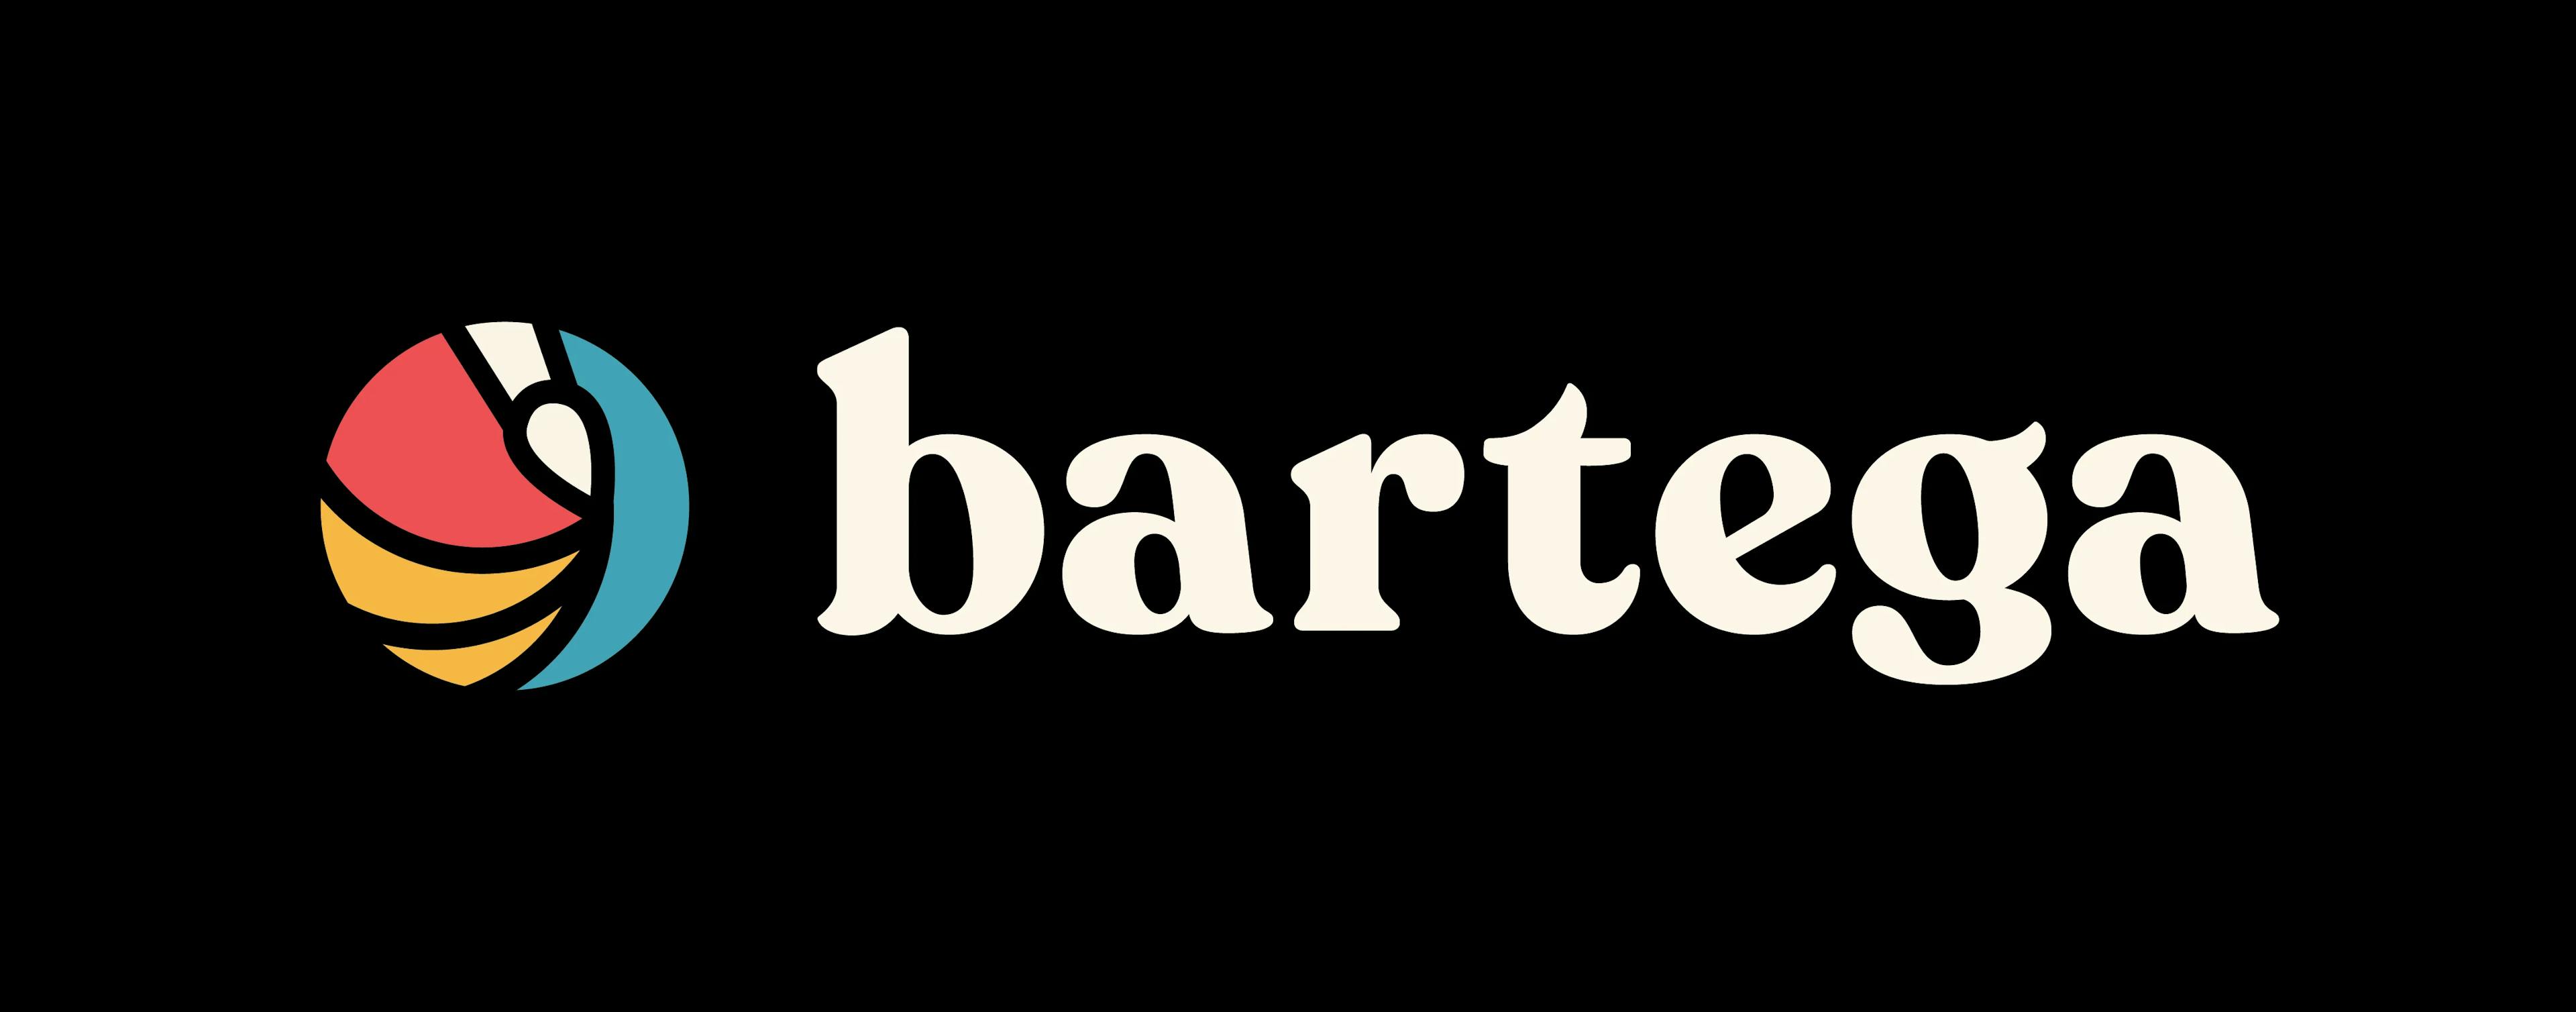 bartega-logo